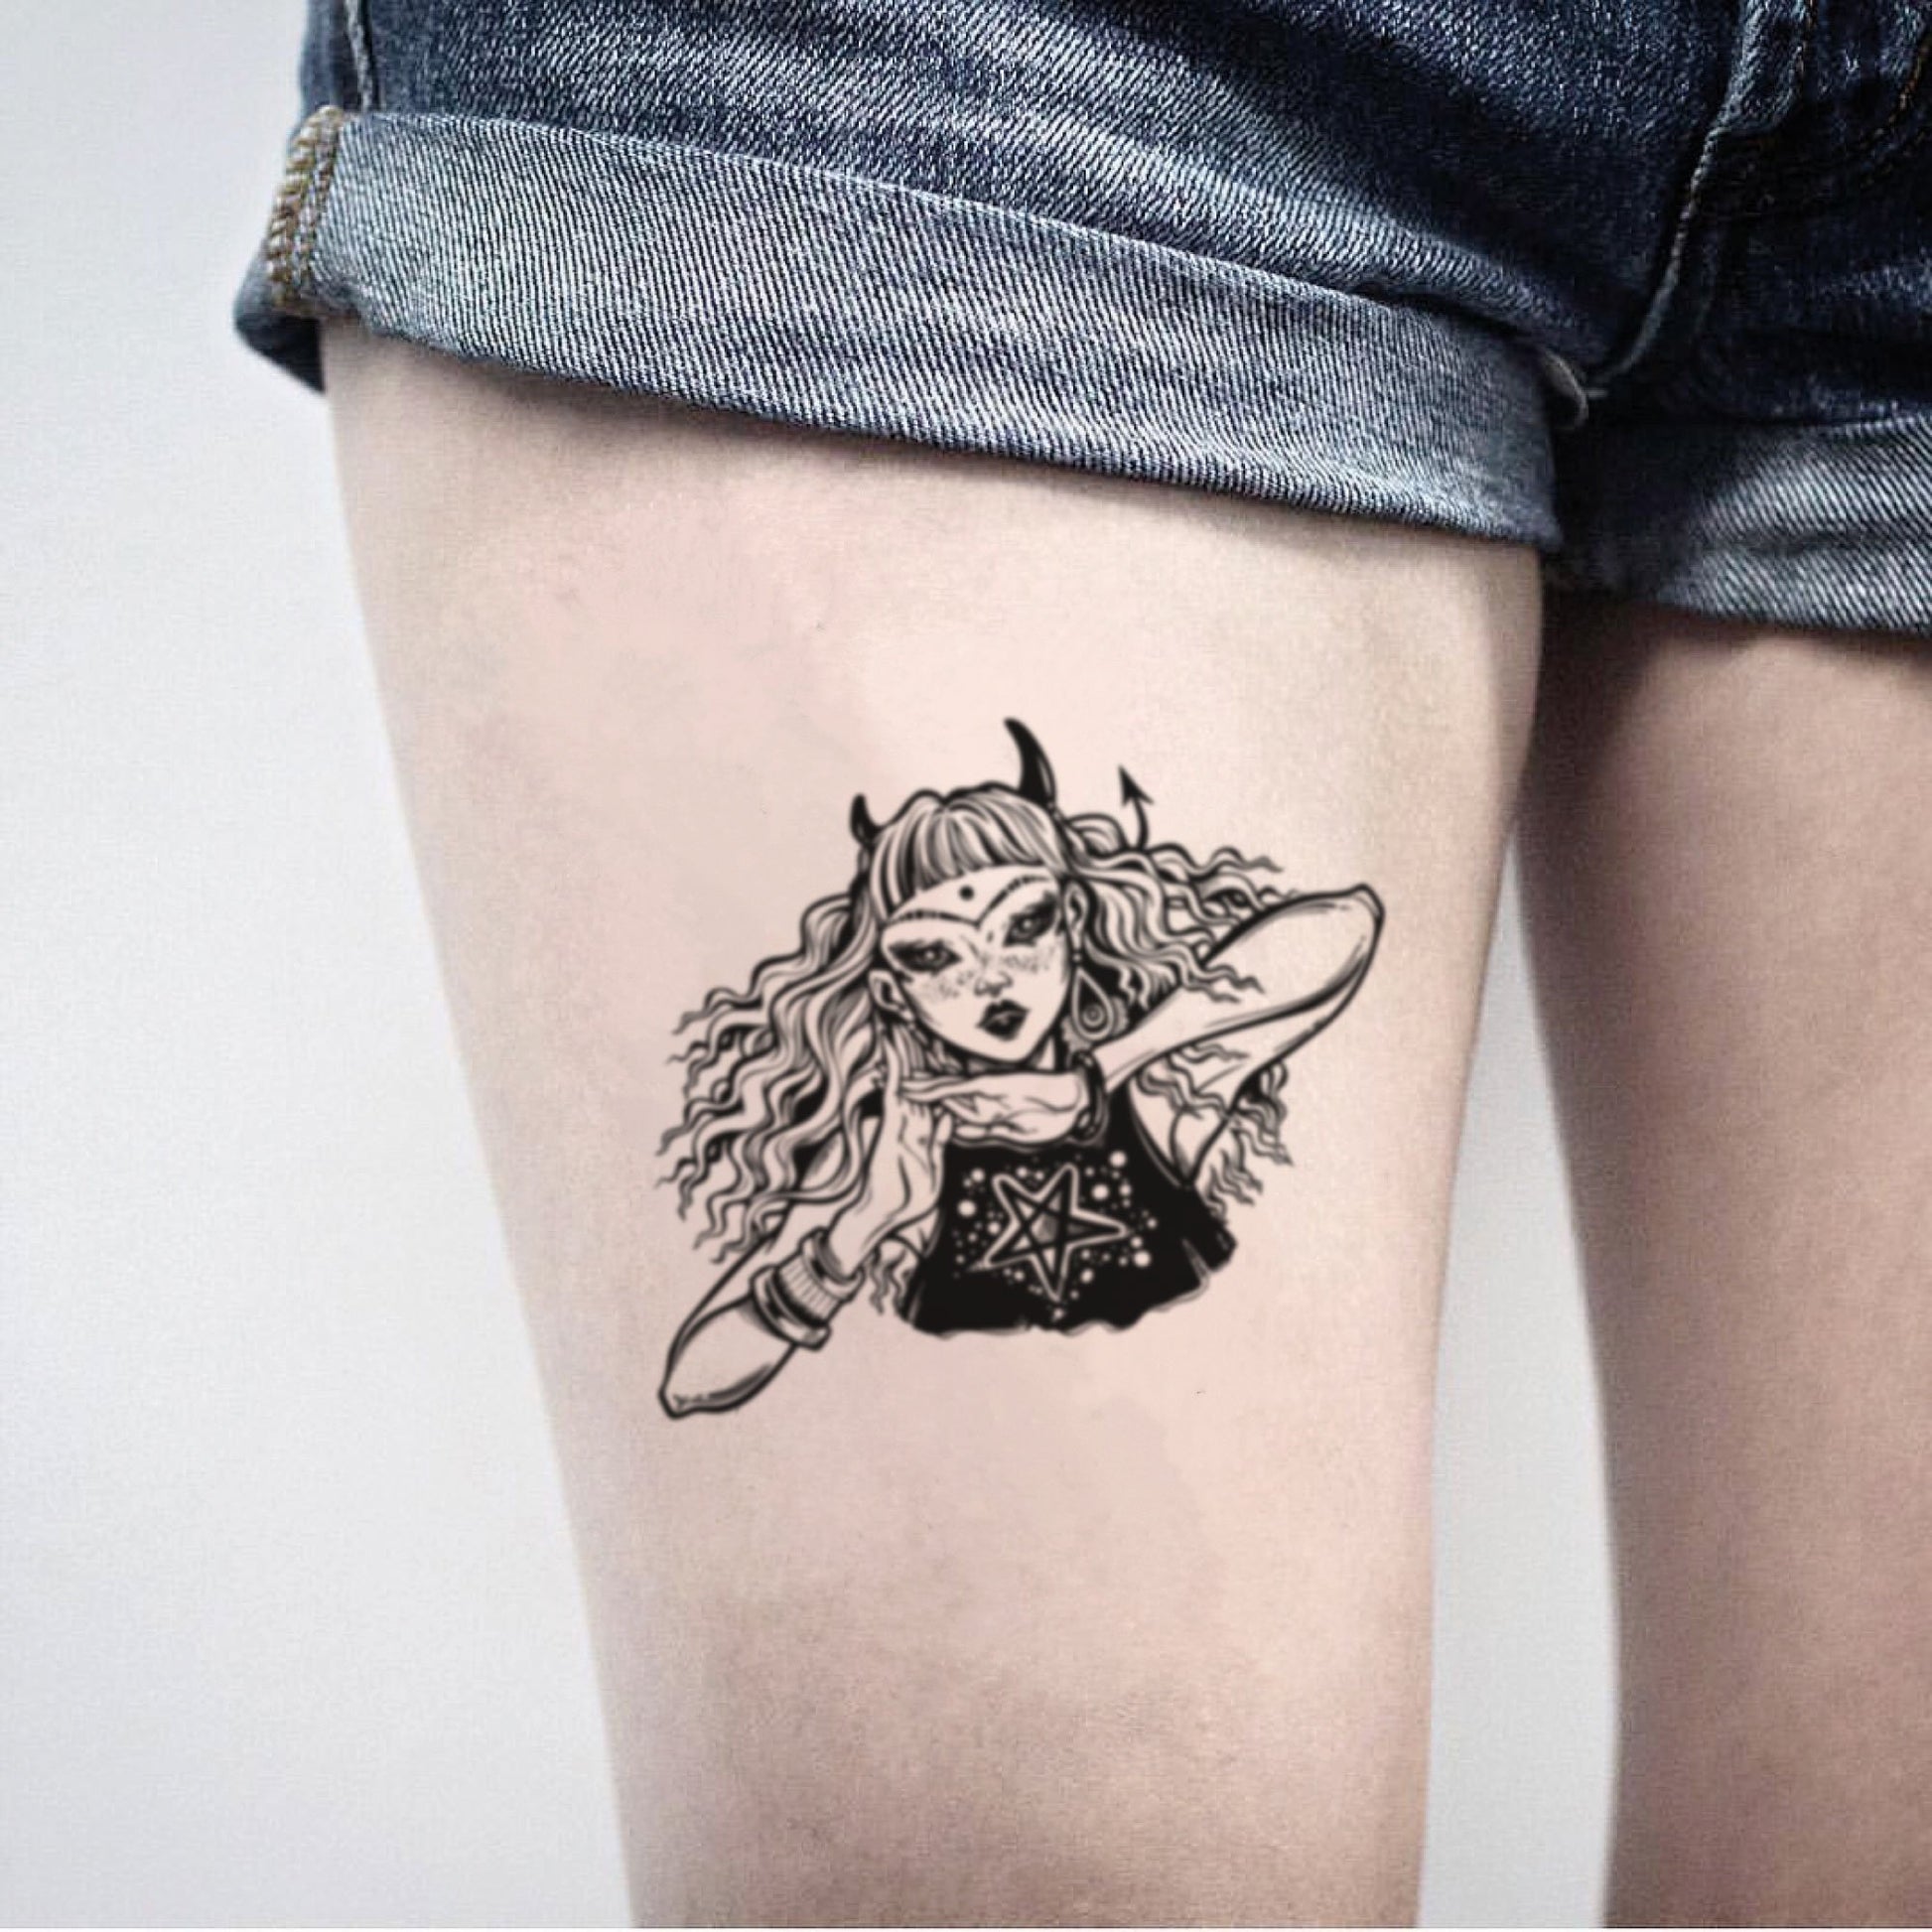 fake medium tank girl illustrative temporary tattoo sticker design idea on thigh